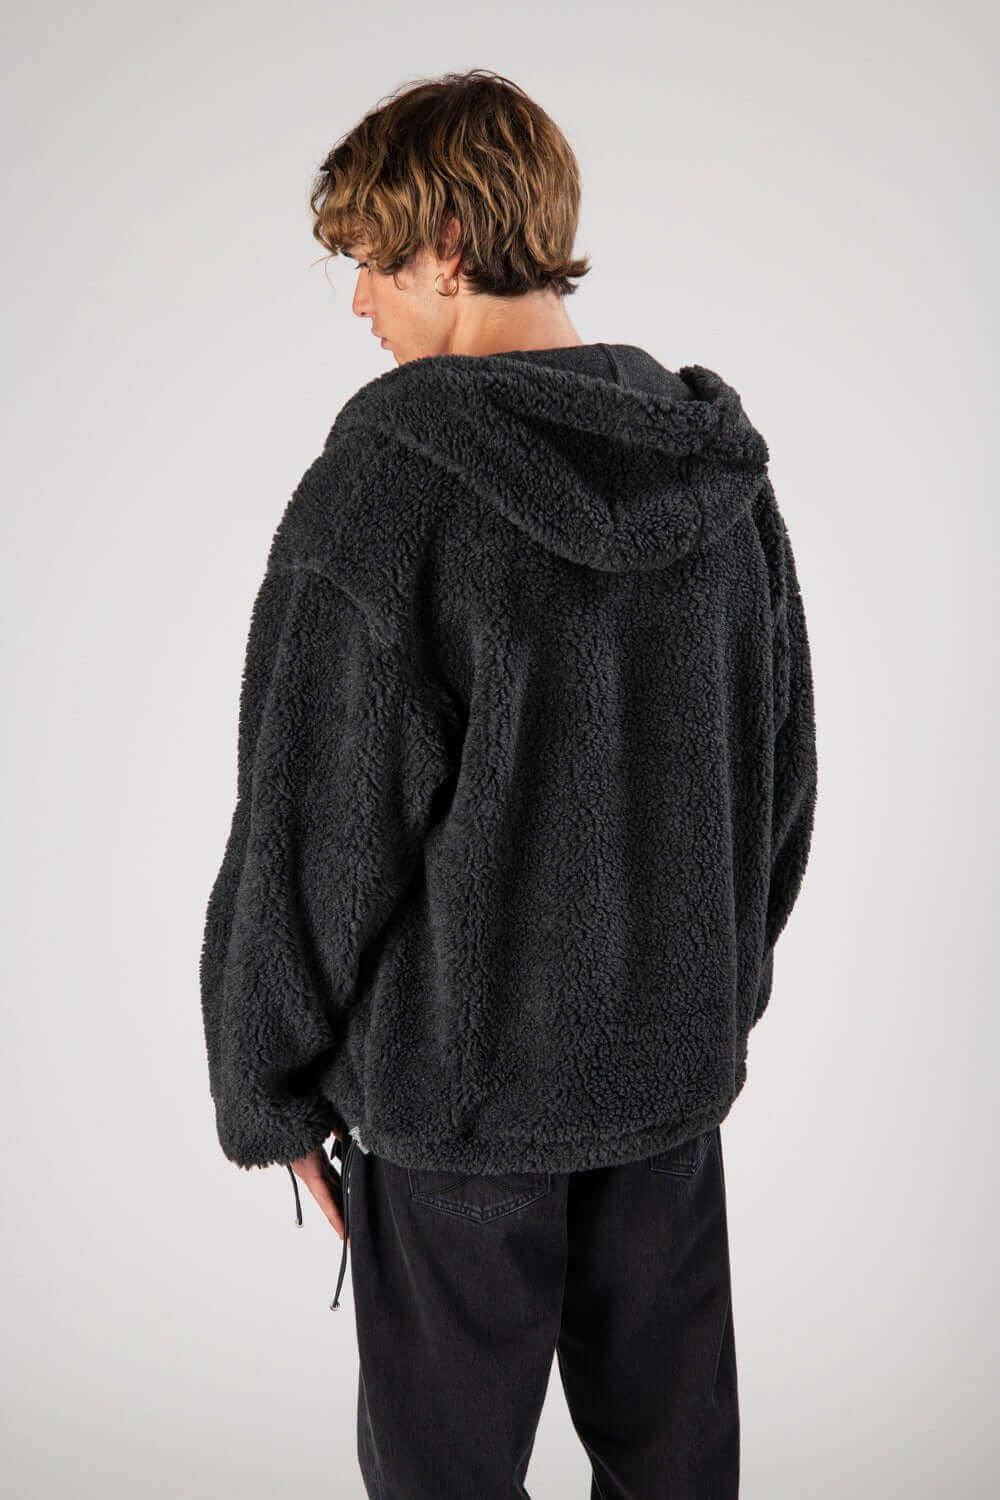 FLEECE HOODIE Fleece hoodie jacket. Embroidered logo on the sleeve. Zip closure. Wrist and bottom coulisse. Side slit pockets. HTC LOS ANGELES